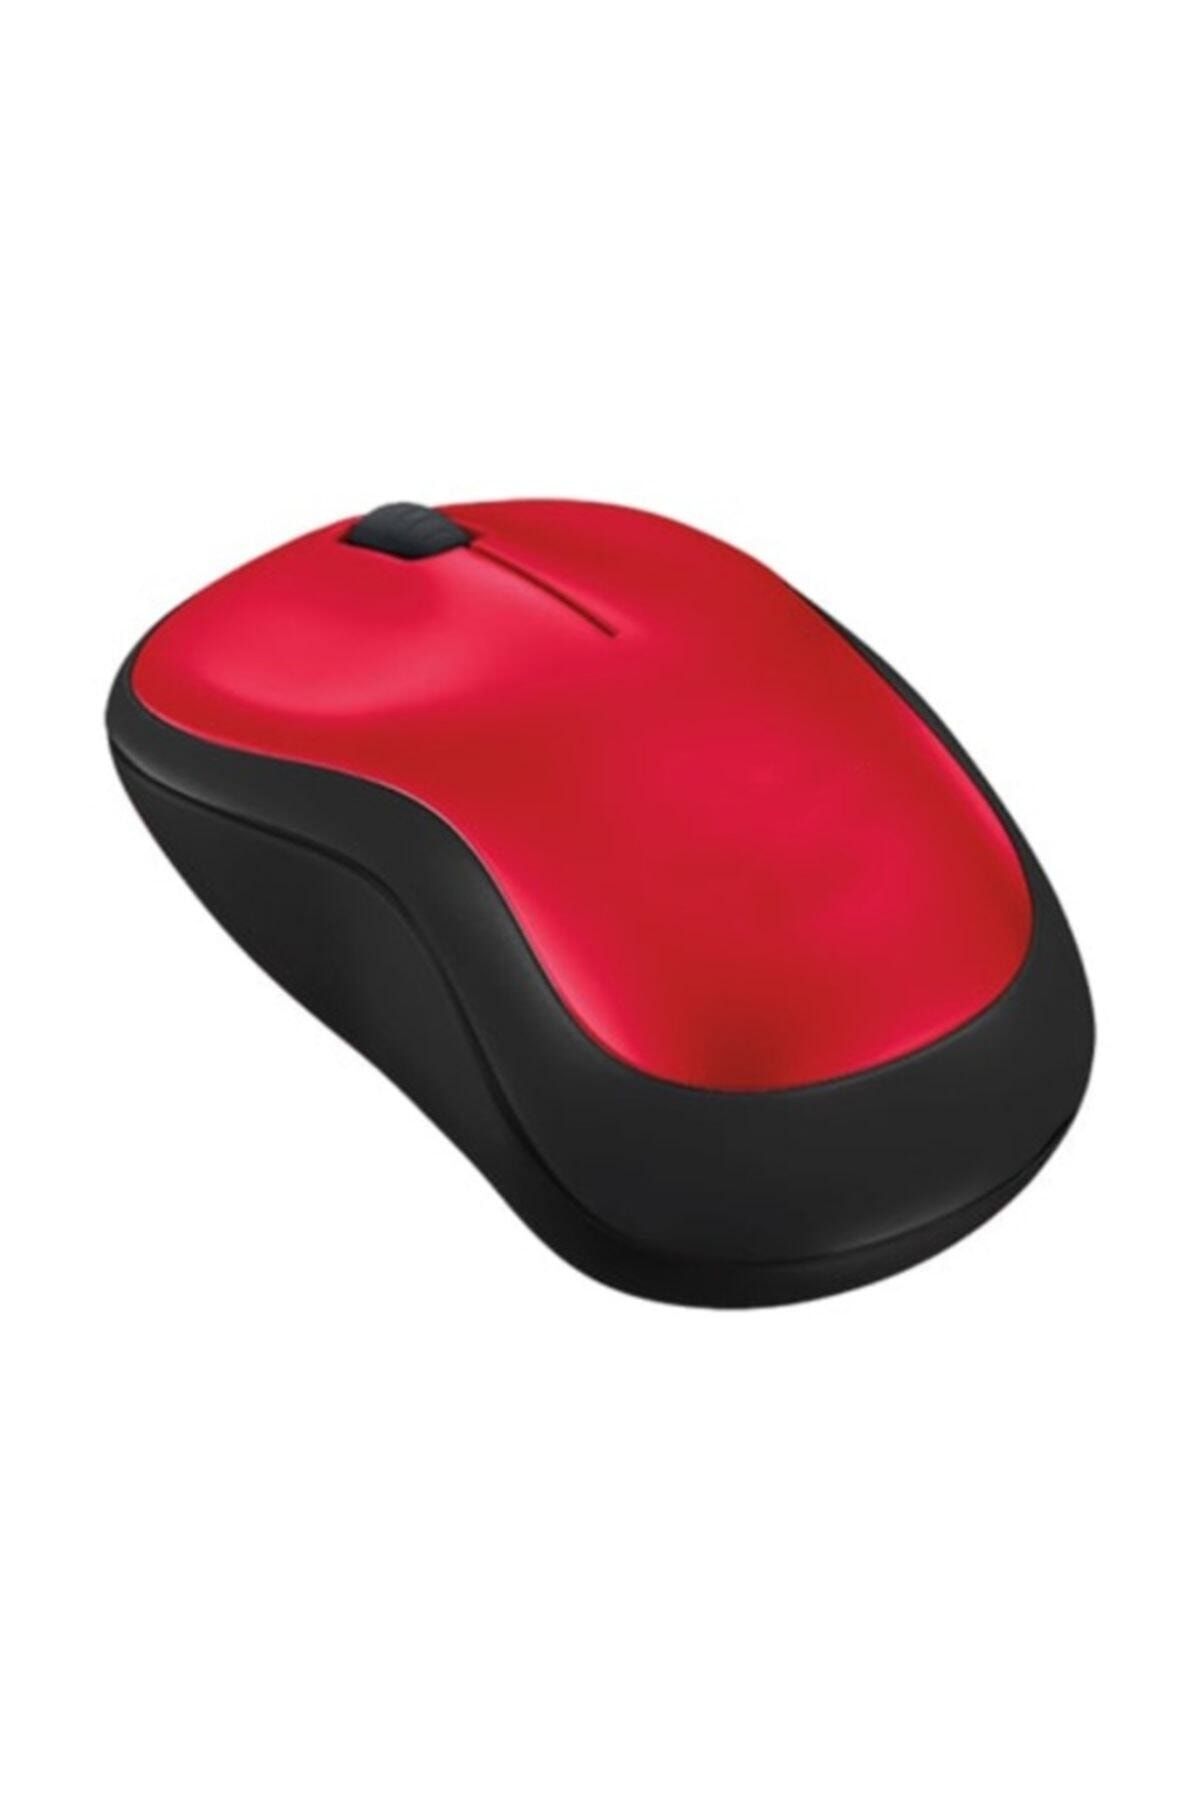 Gomax GMX M4 2.4Ghz Nano Alıcı Kablosuz Wireless Mouse Kırmızı